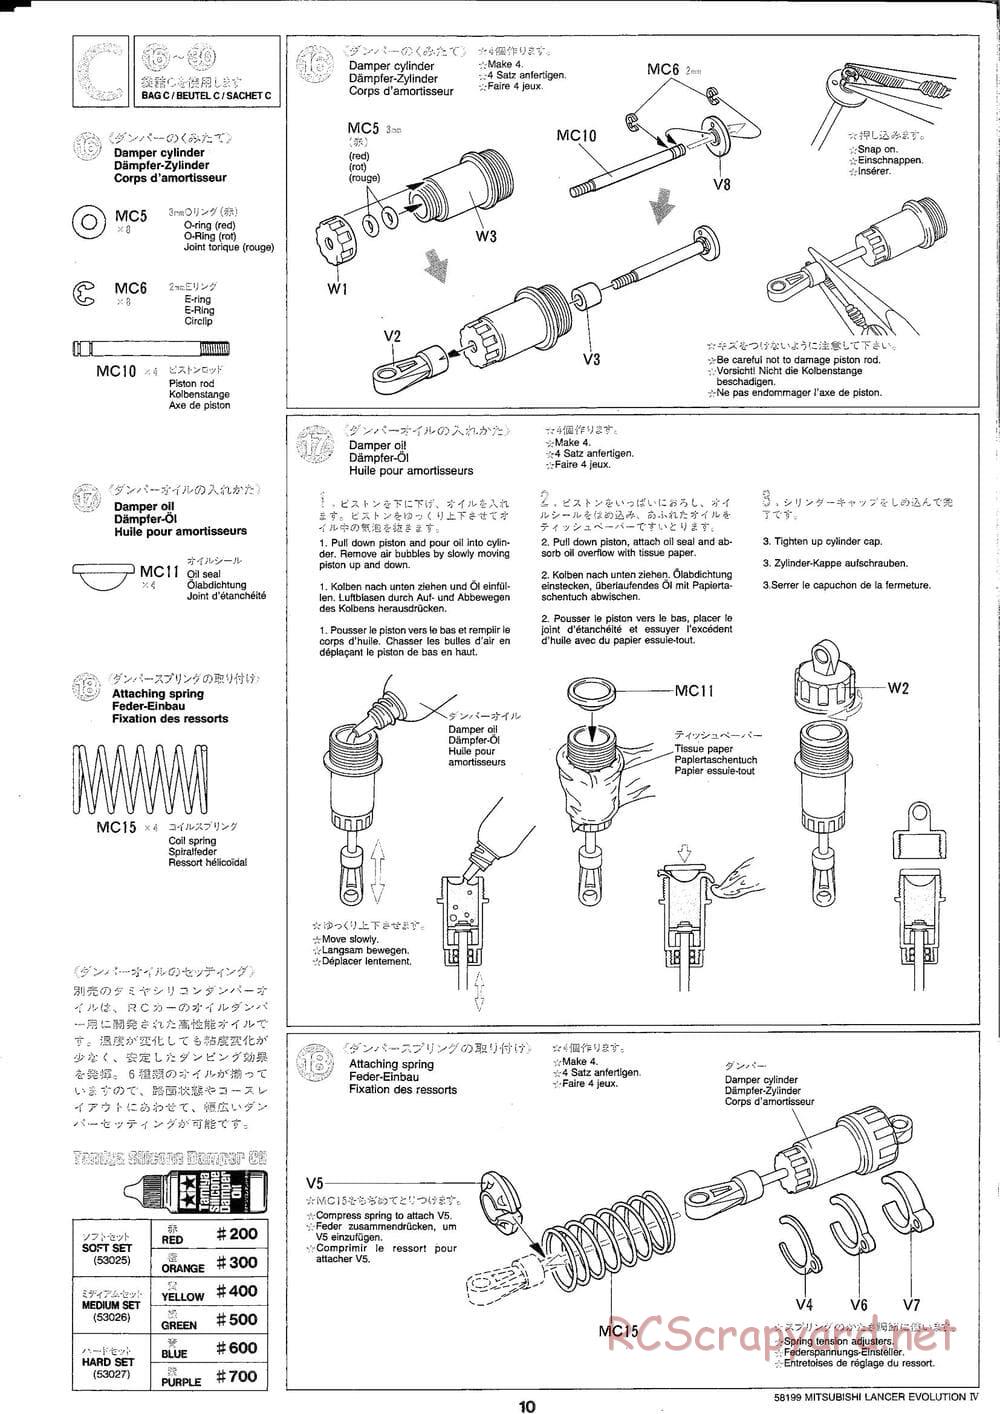 Tamiya - Mitsubishi Lancer Evolution IV - TA-03F Chassis - Manual - Page 10